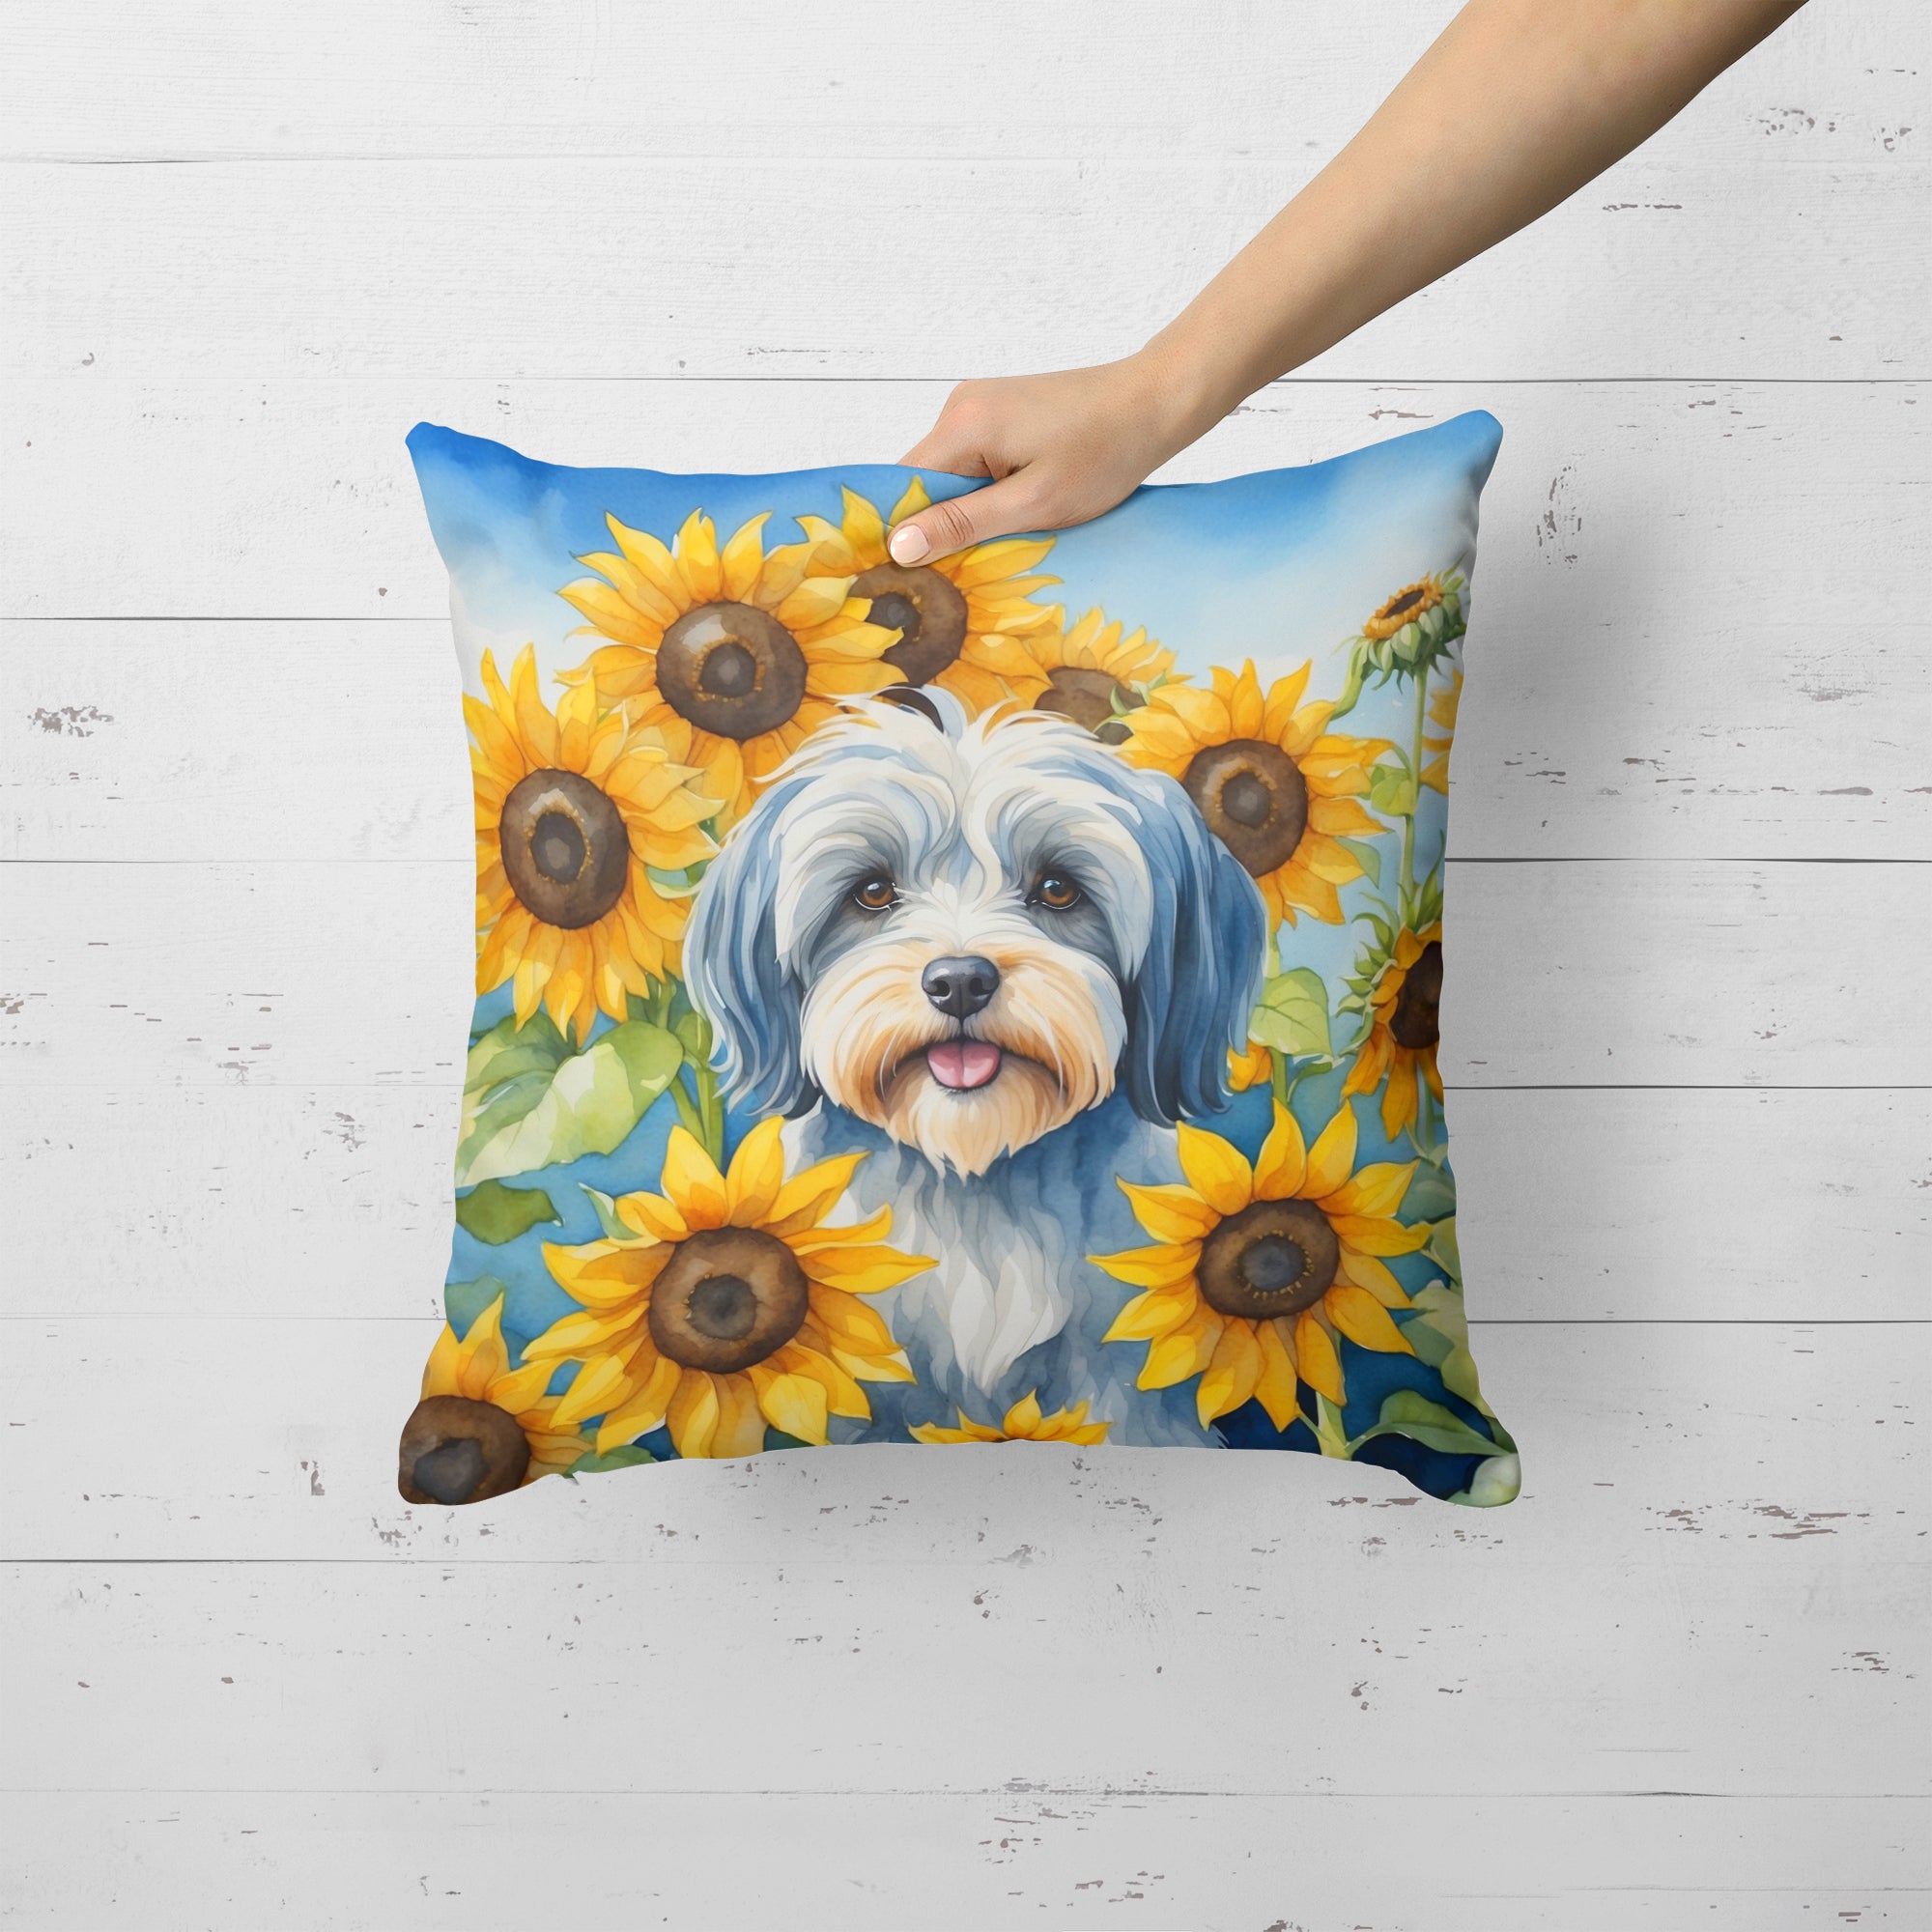 Buy this Tibetan Terrier in Sunflowers Throw Pillow